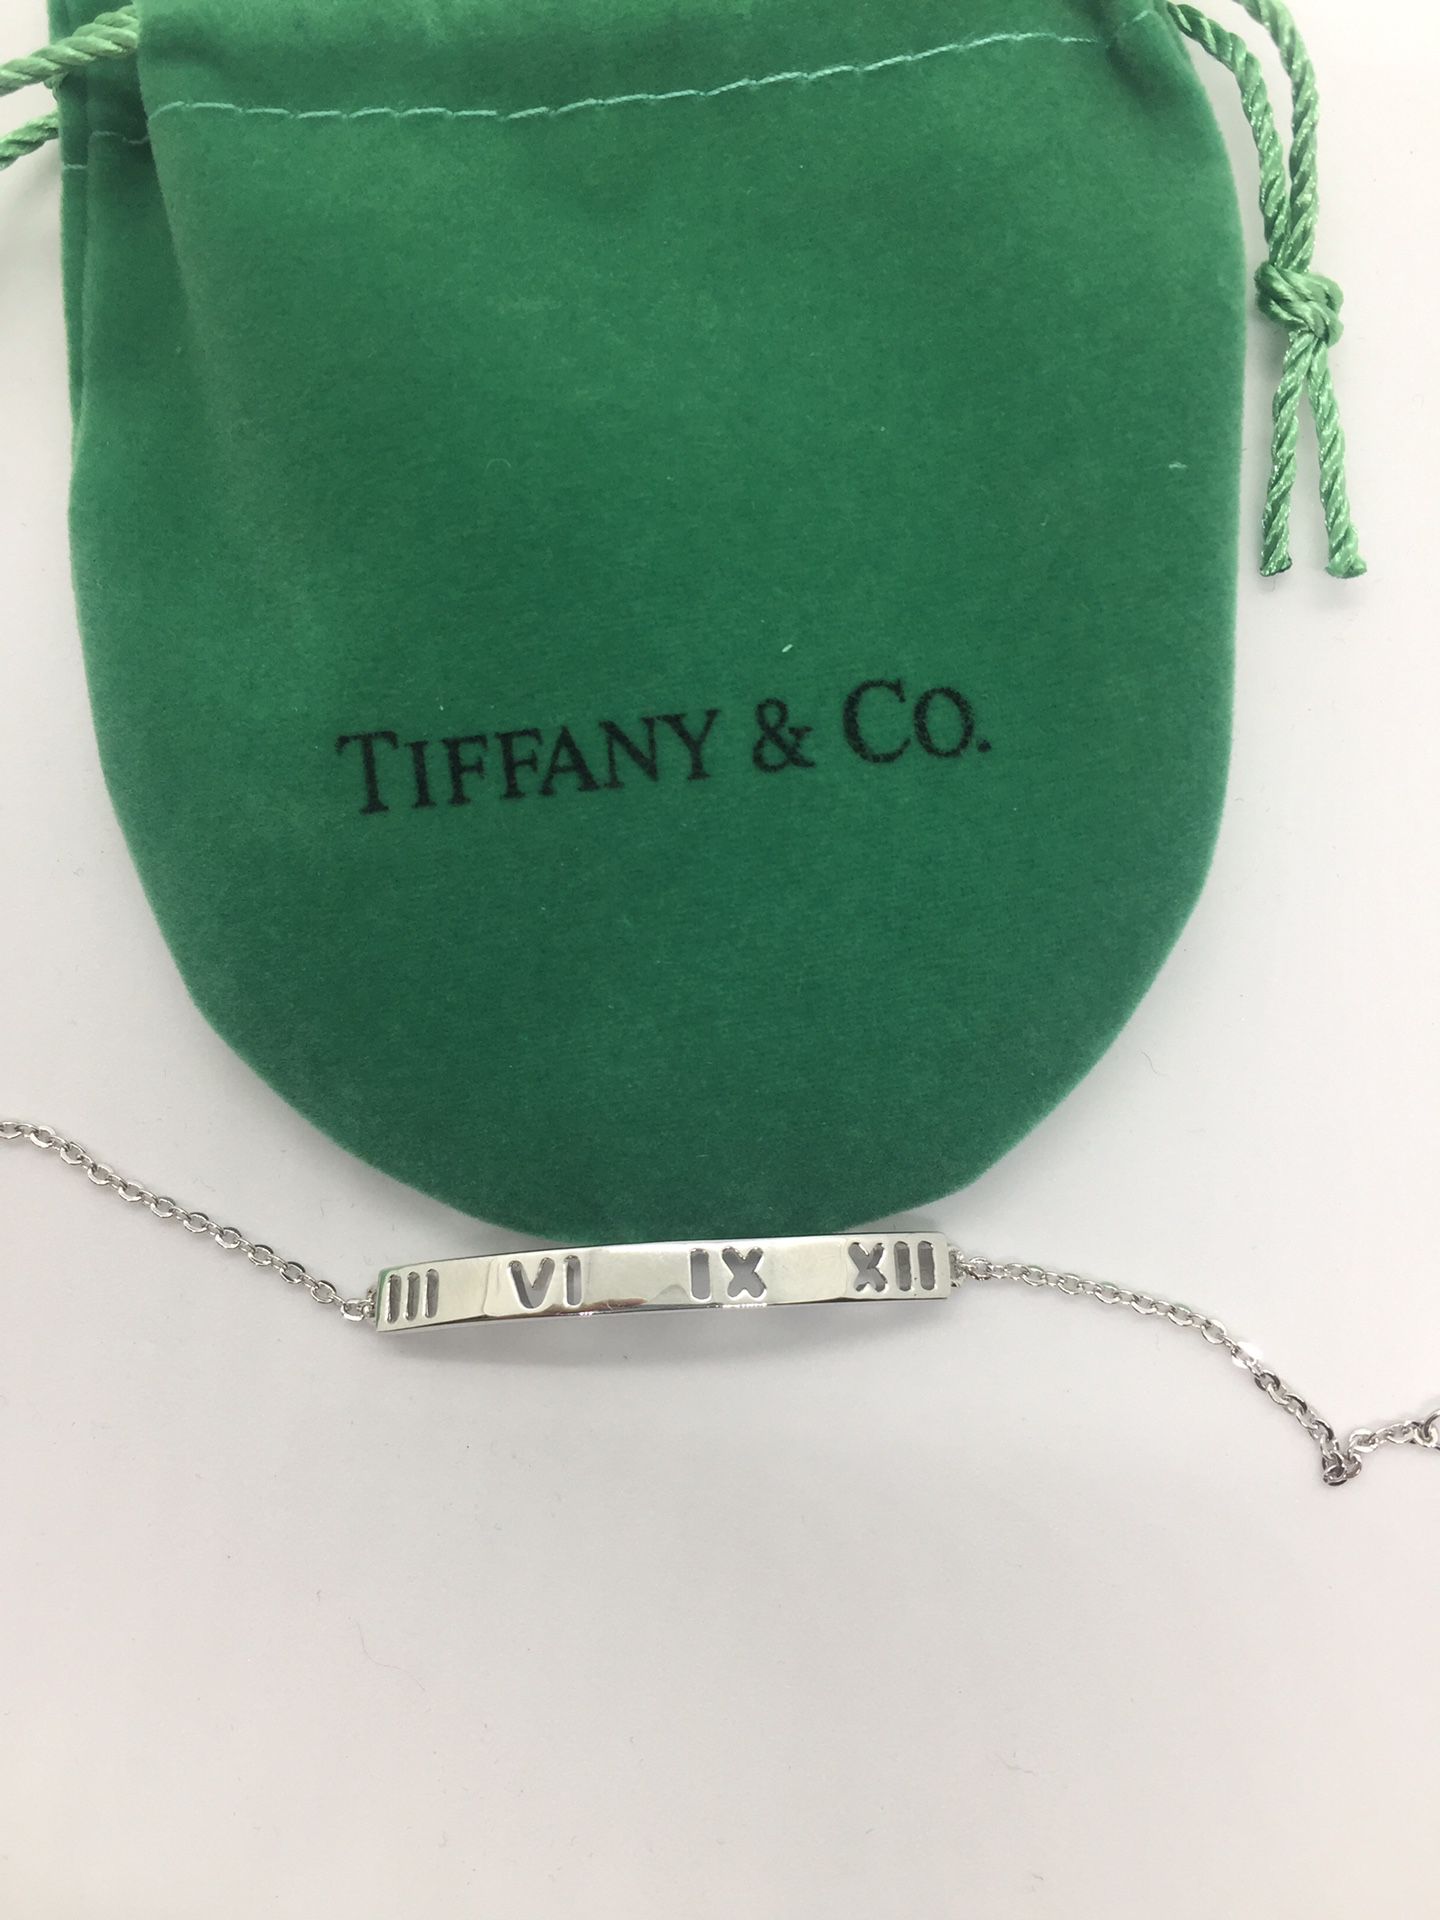 Brand new Tiffany & Co. Atlas bracelet